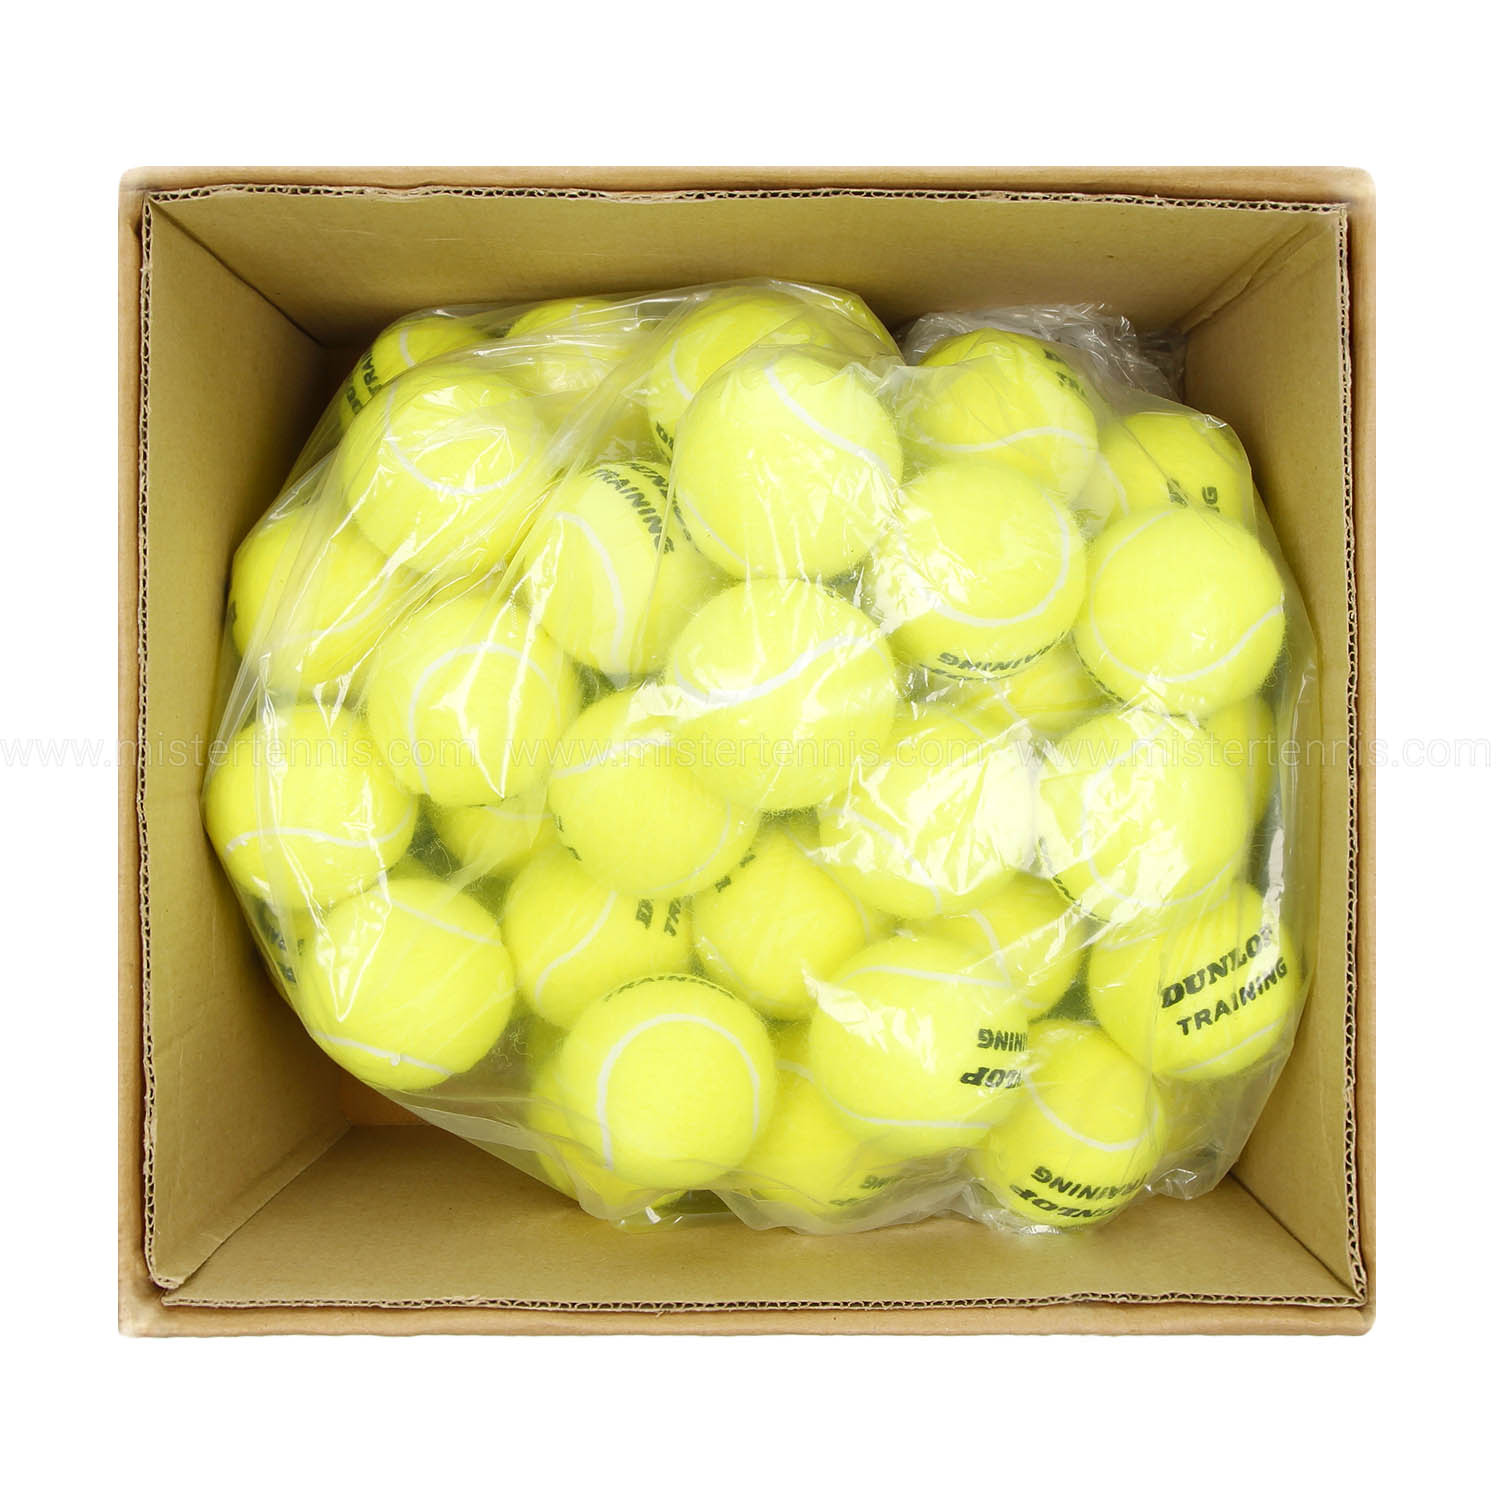 Dunlop Tennis Balls Bucket of 60 Trainer Balls 